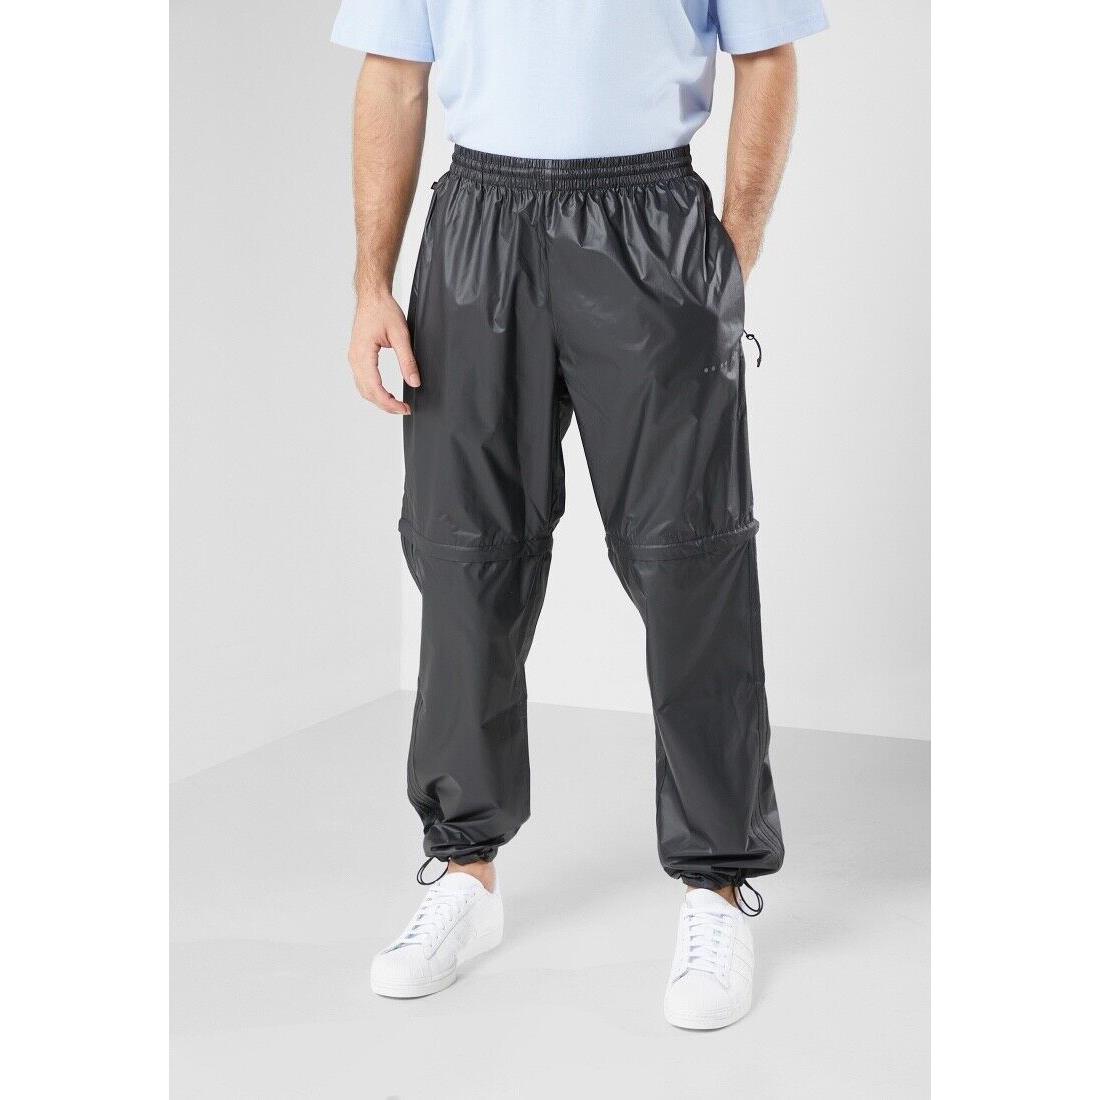 Adidas Originals HK2753 Glanz Nylon Pants Scally Trackies Black Small